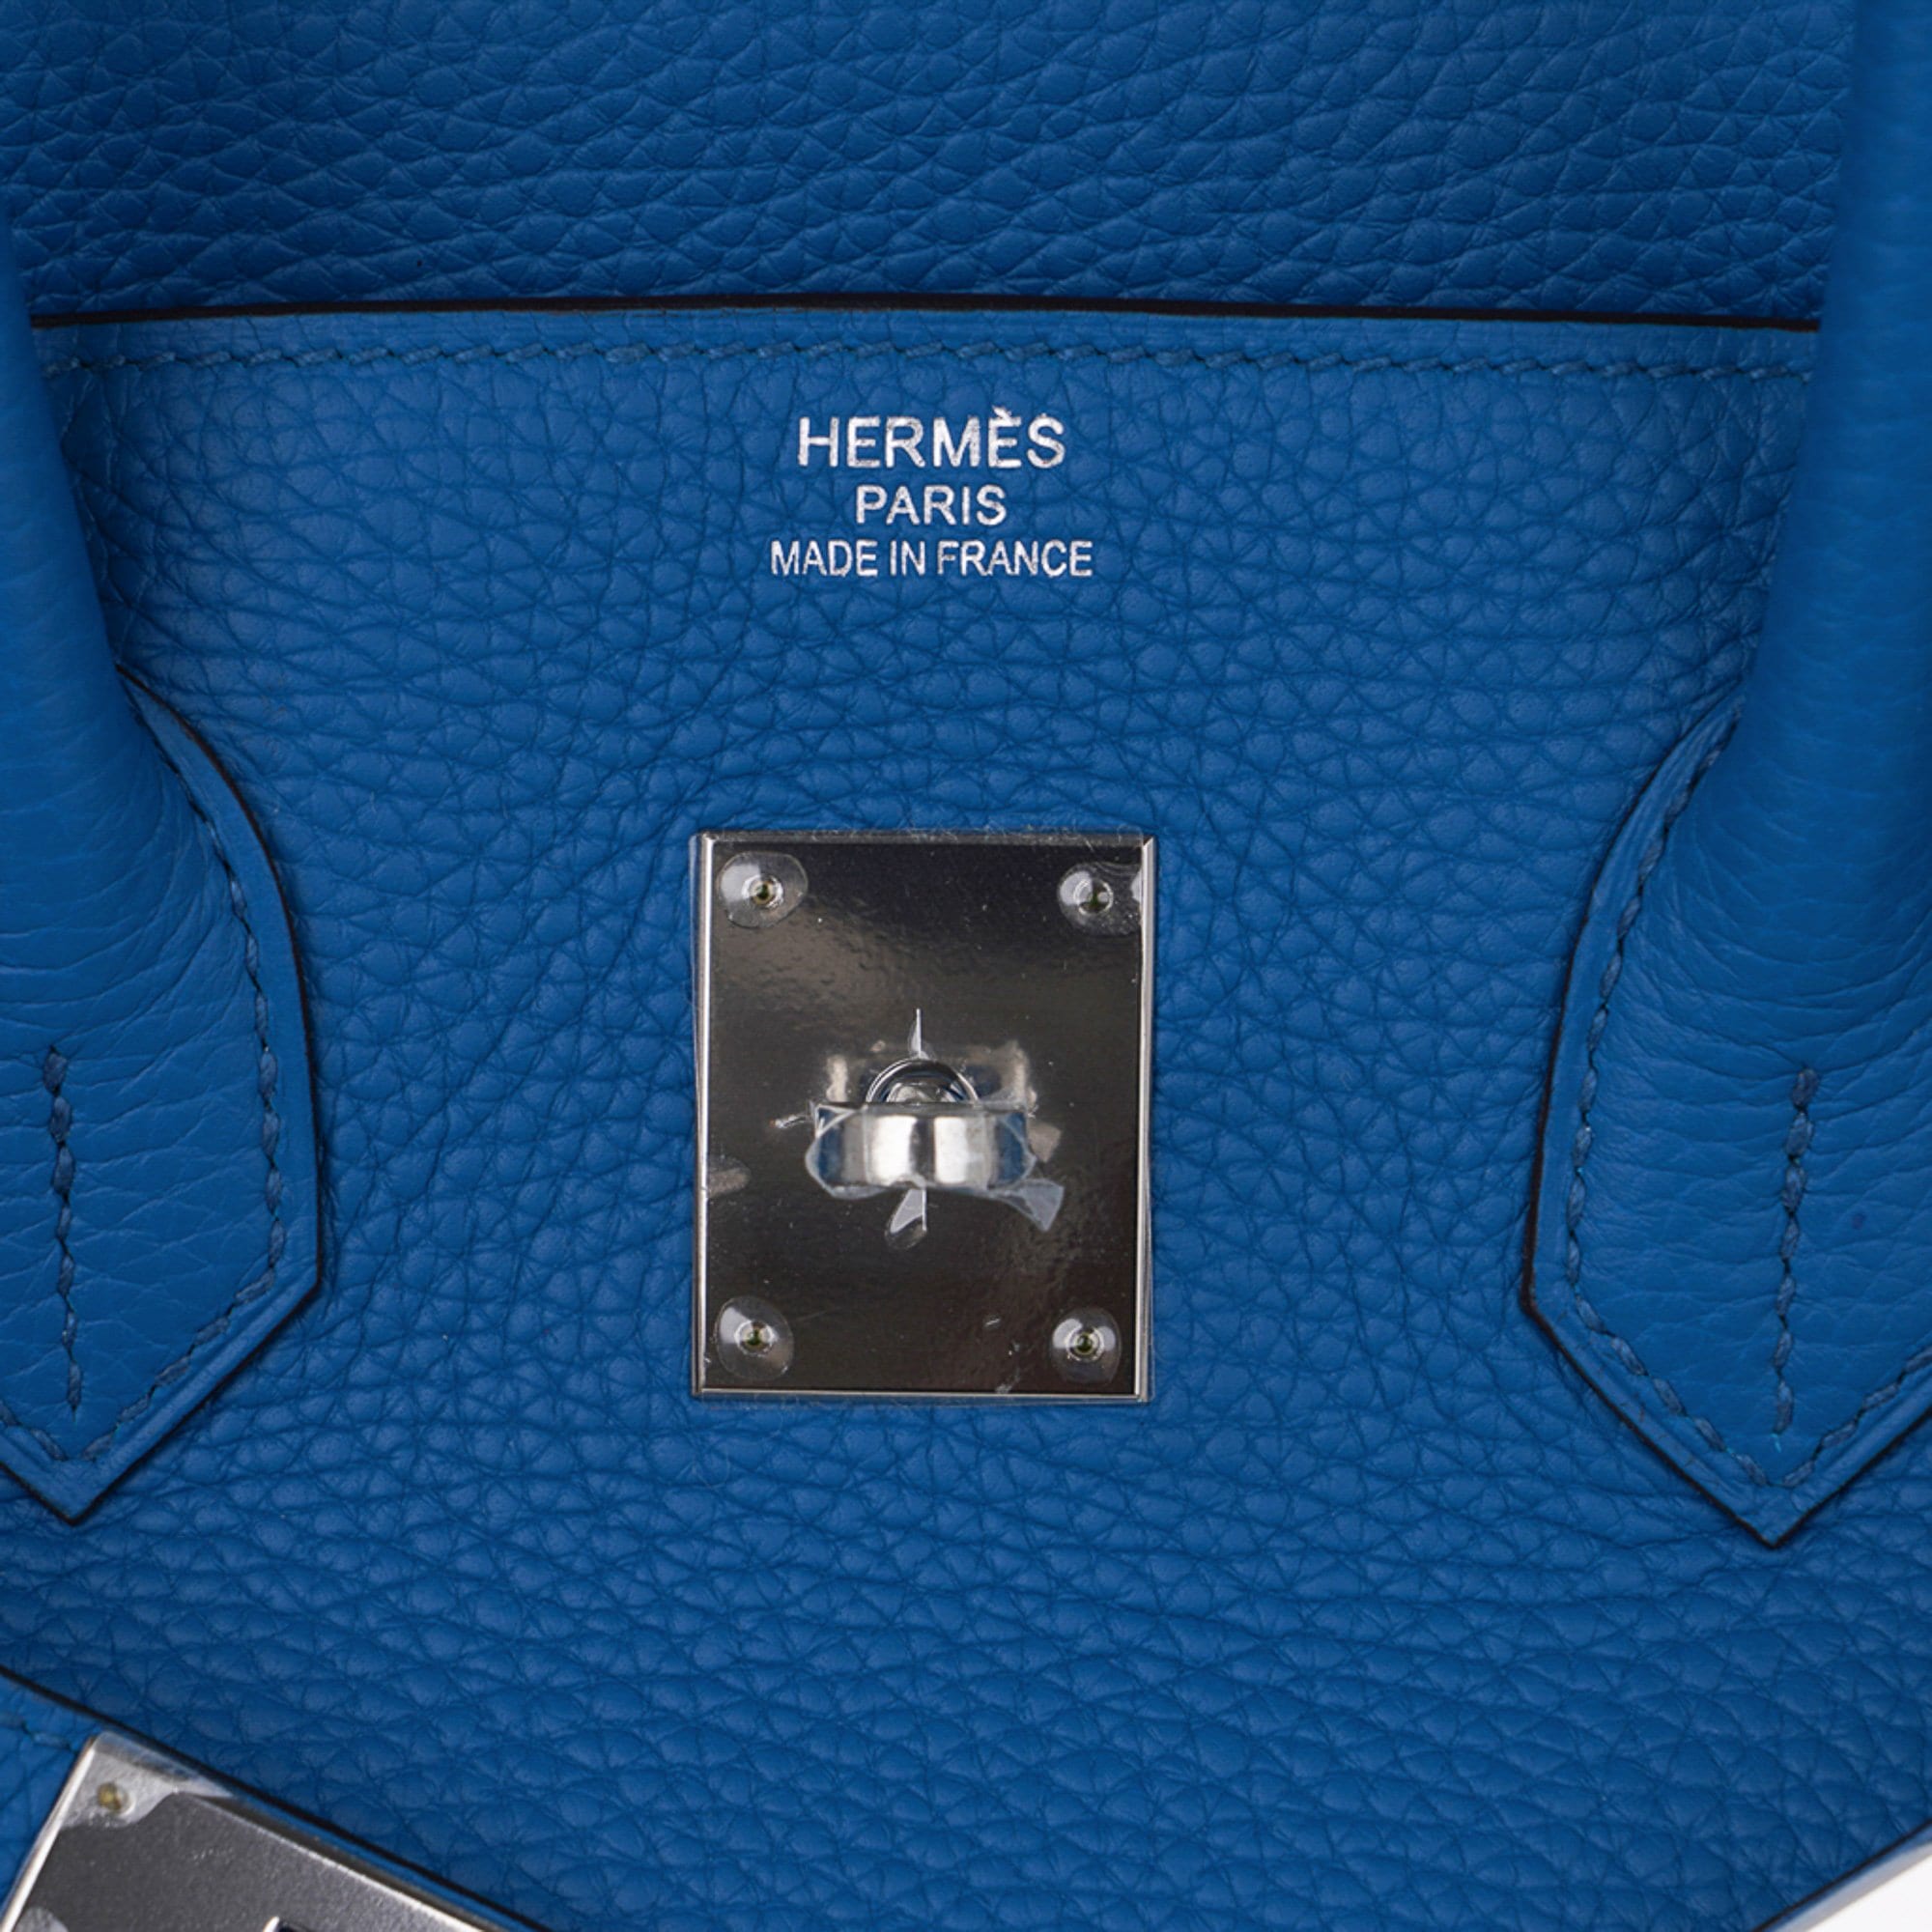 Kelly 25 Togo Blue Zanzibar  Hermes bag birkin, Hermes birkin blue, Hermes  kelly bag